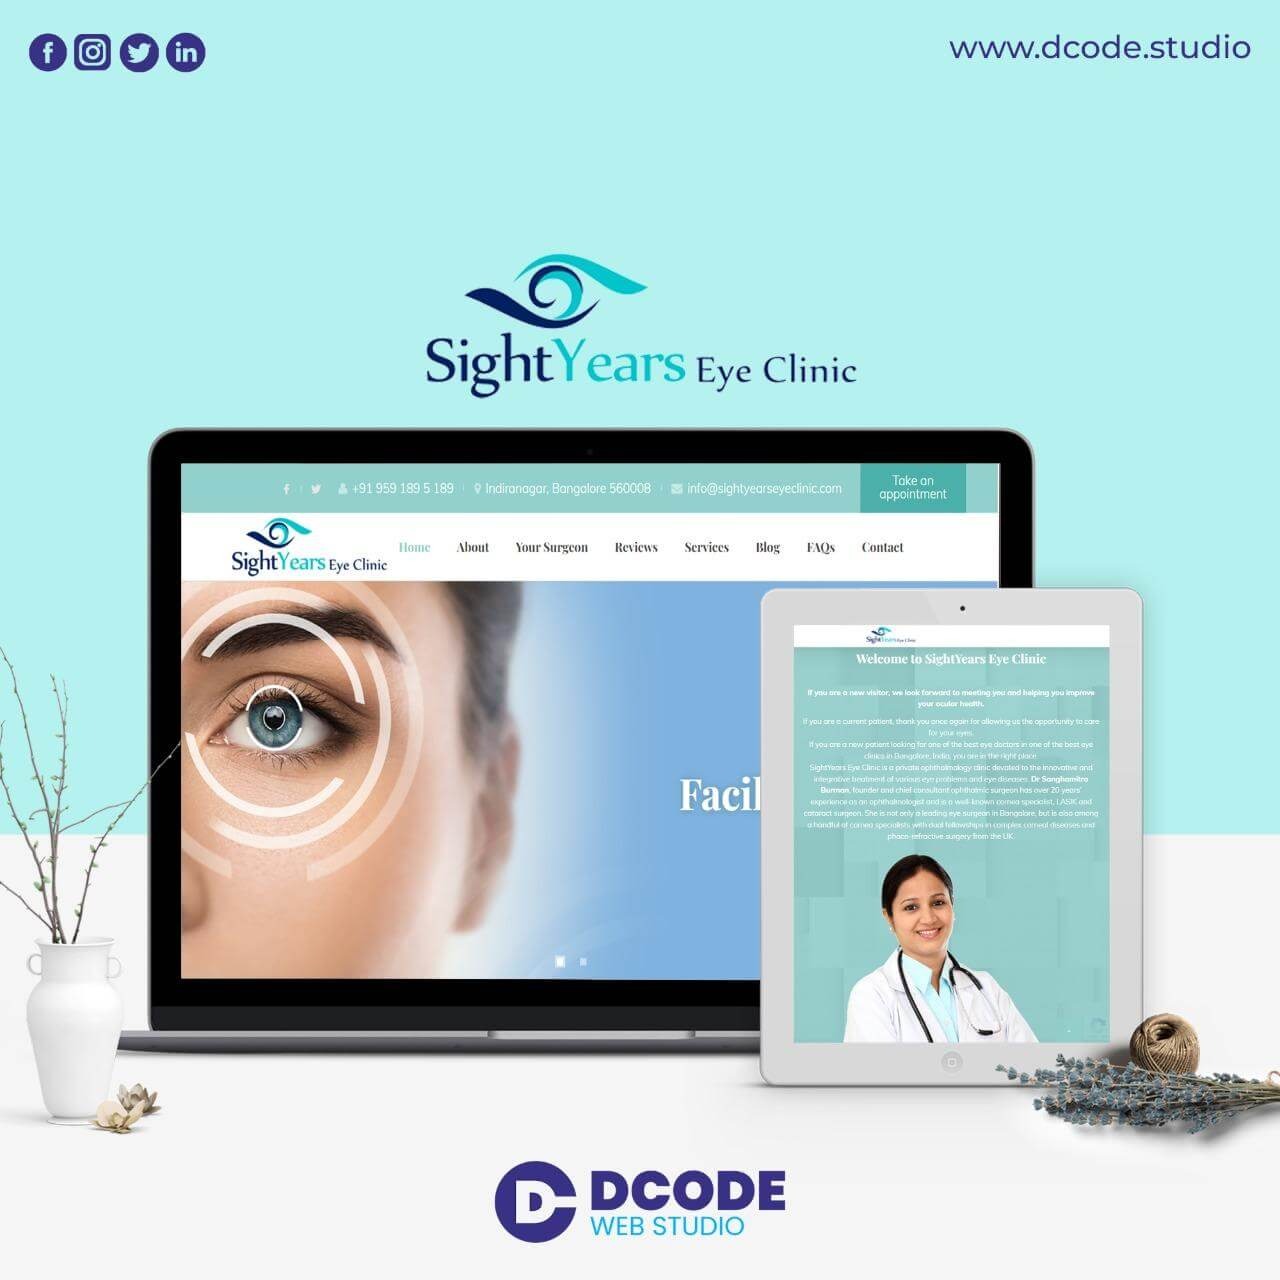 Sightyears Eye Clinic Mockup in Laptop, Mobile, and Tablet sizes, Sightyears Eye Clinic Website Mockup created by Dcode Web Studio, Sightyears Eye Clinic Website Designed and Developed by Dcode Web Studio Ahmedabad.